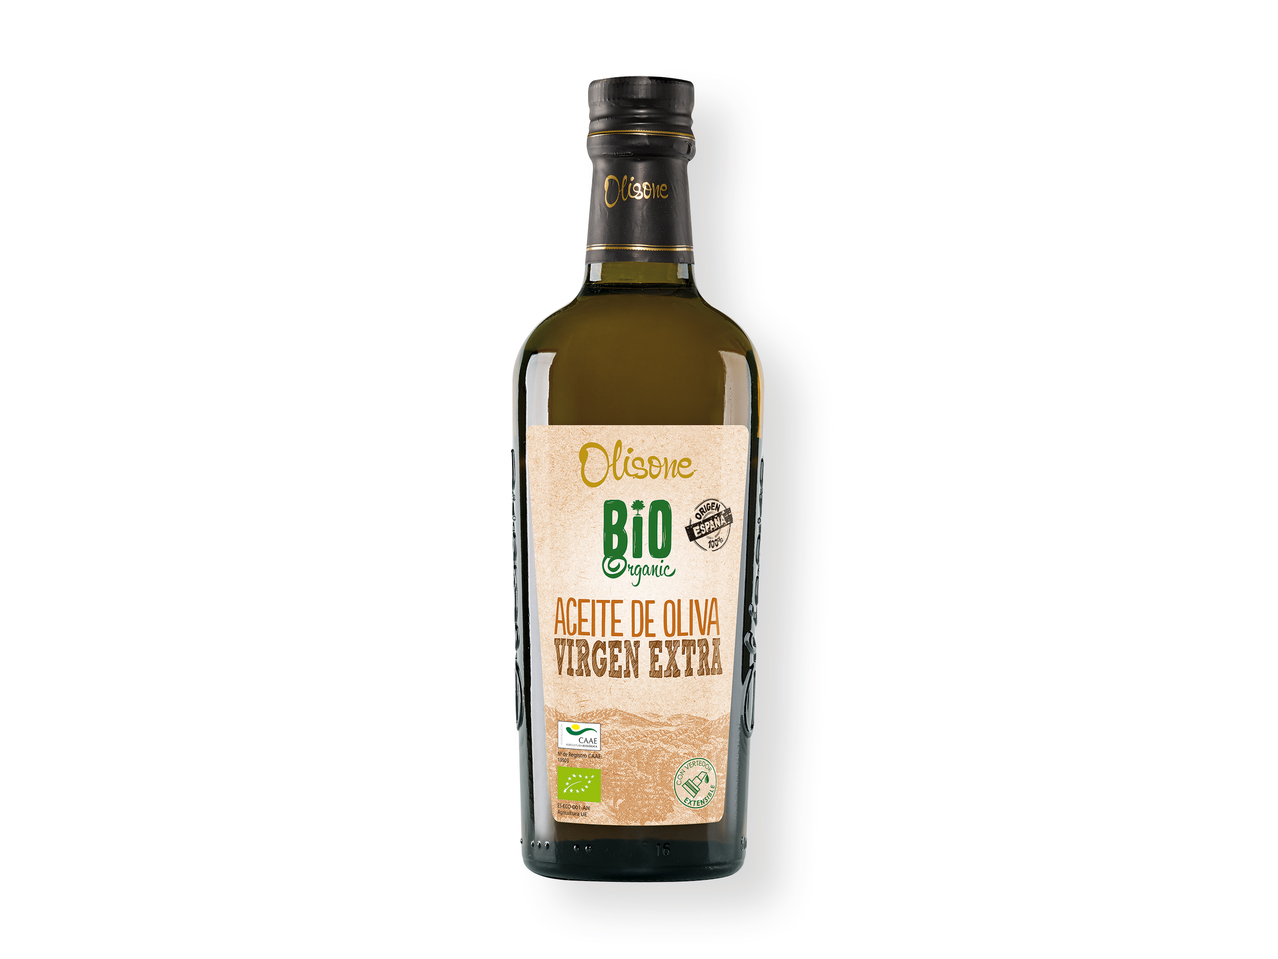 'Olisone(R)' Aceite de oliva ecológico virgen extra